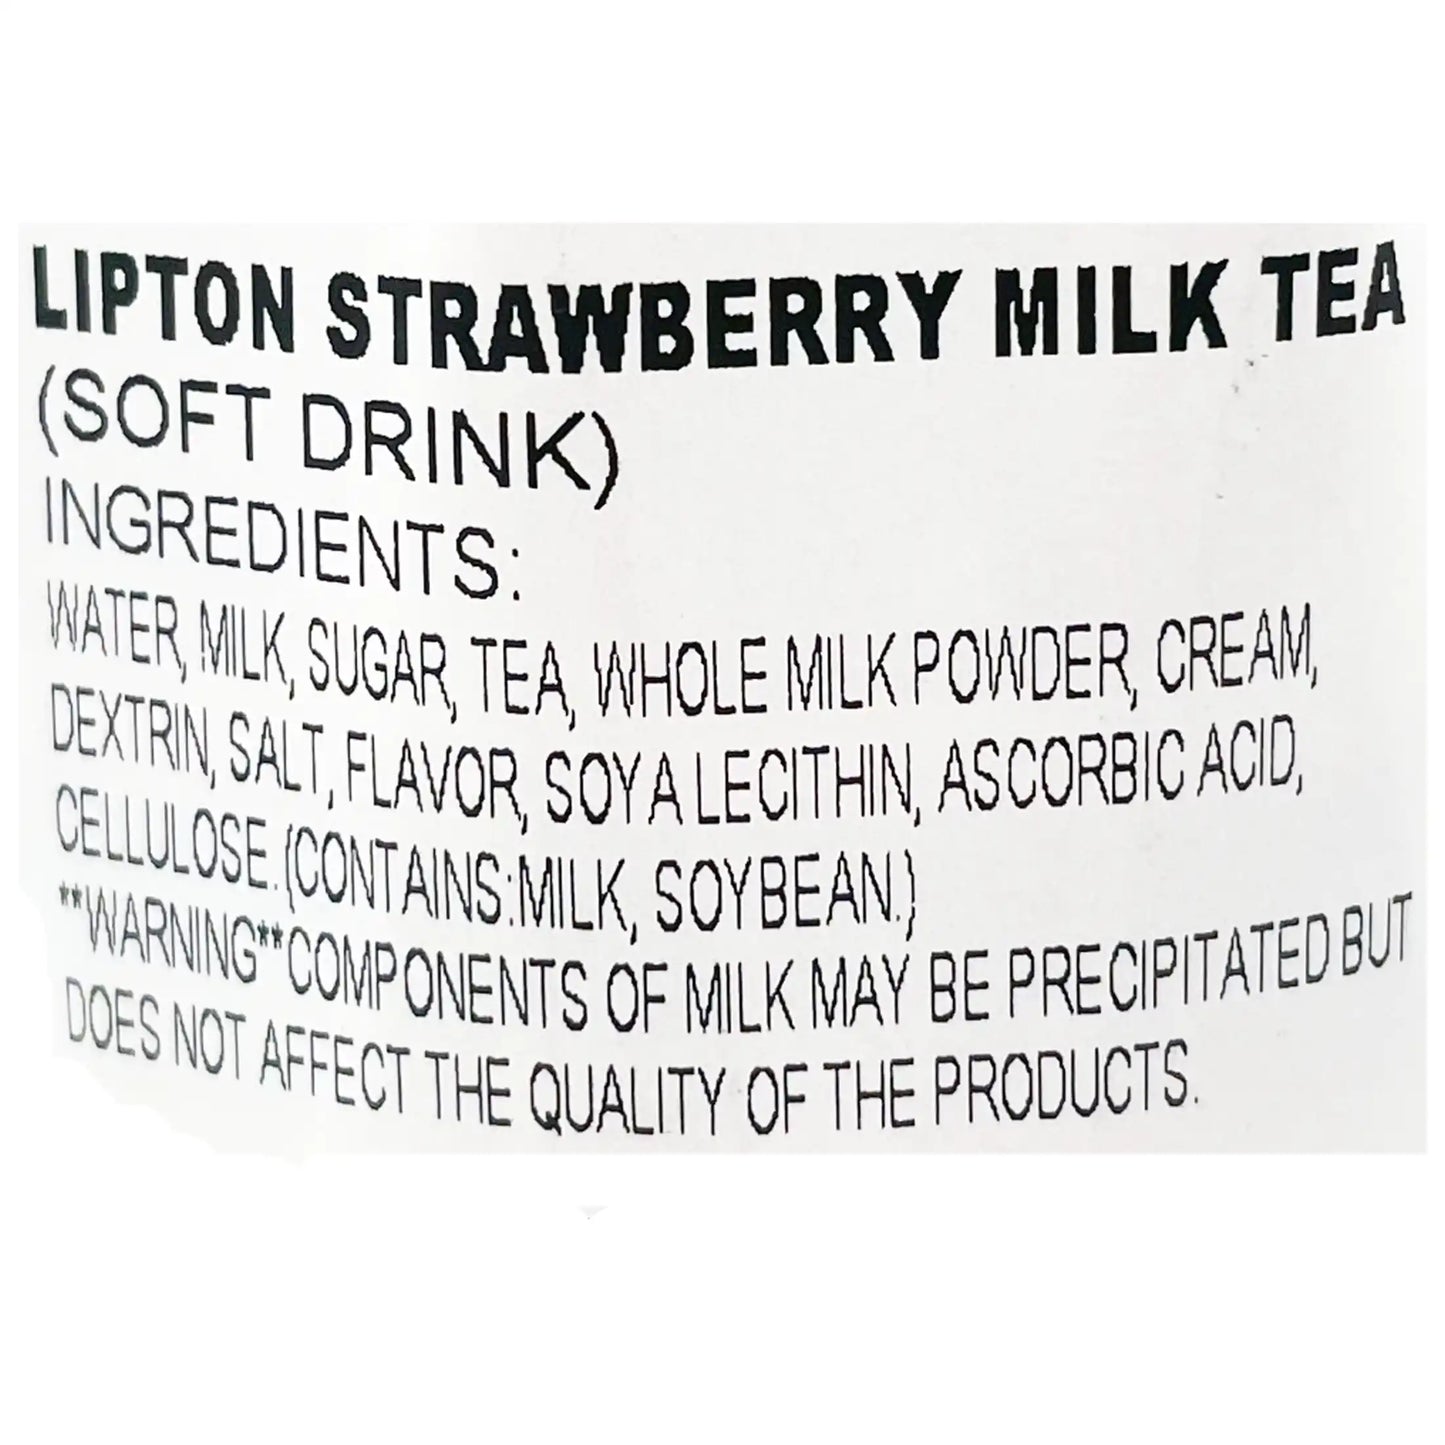 Lipton Melty Strawberry Milk Tea 15.21 fl. oz